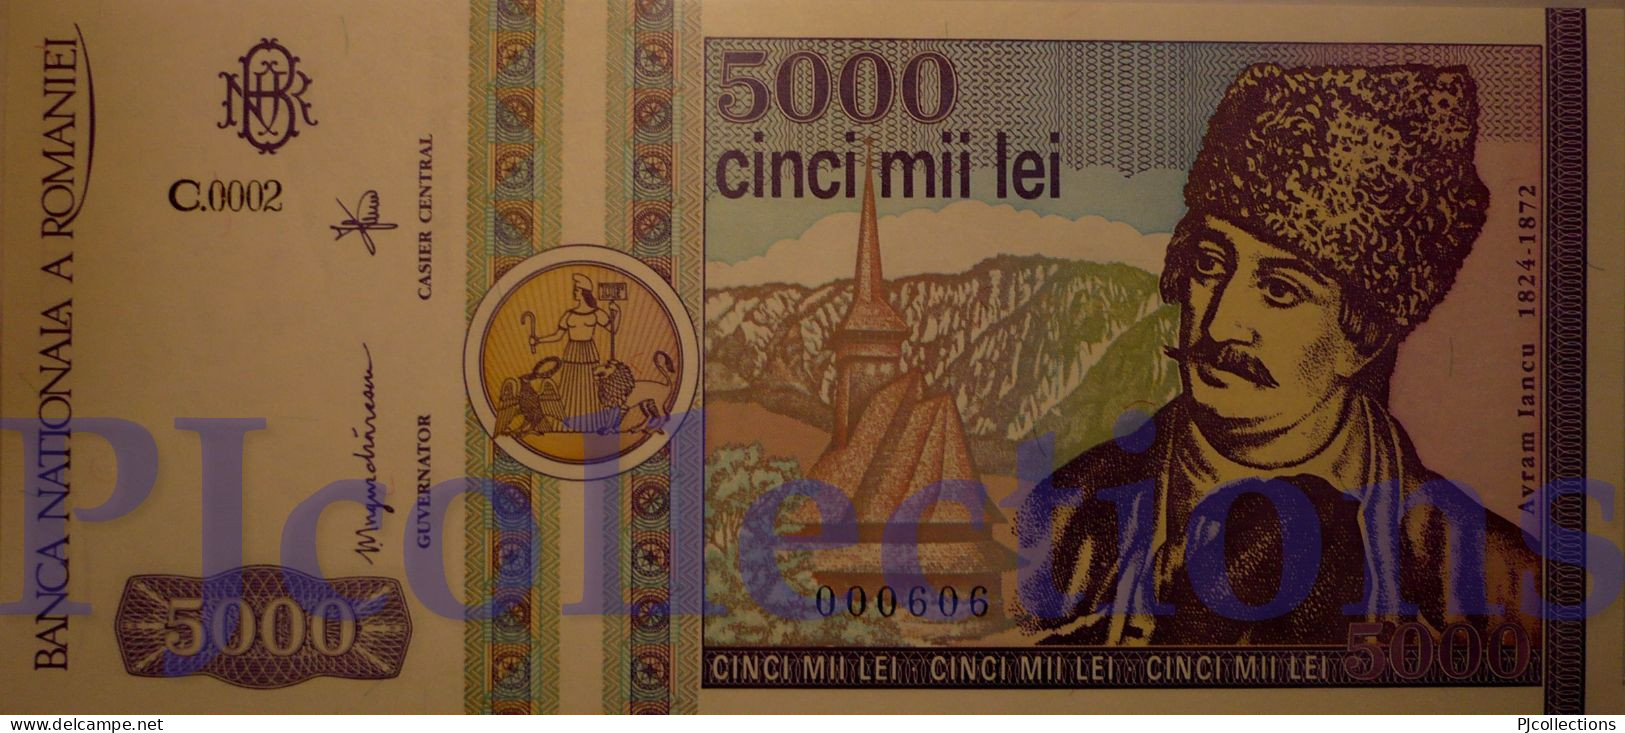 ROMANIA 5000 LEI 1992 PICK 103 UNC LOW & GOOD SERIAL NUMBER "000606" - Rumania